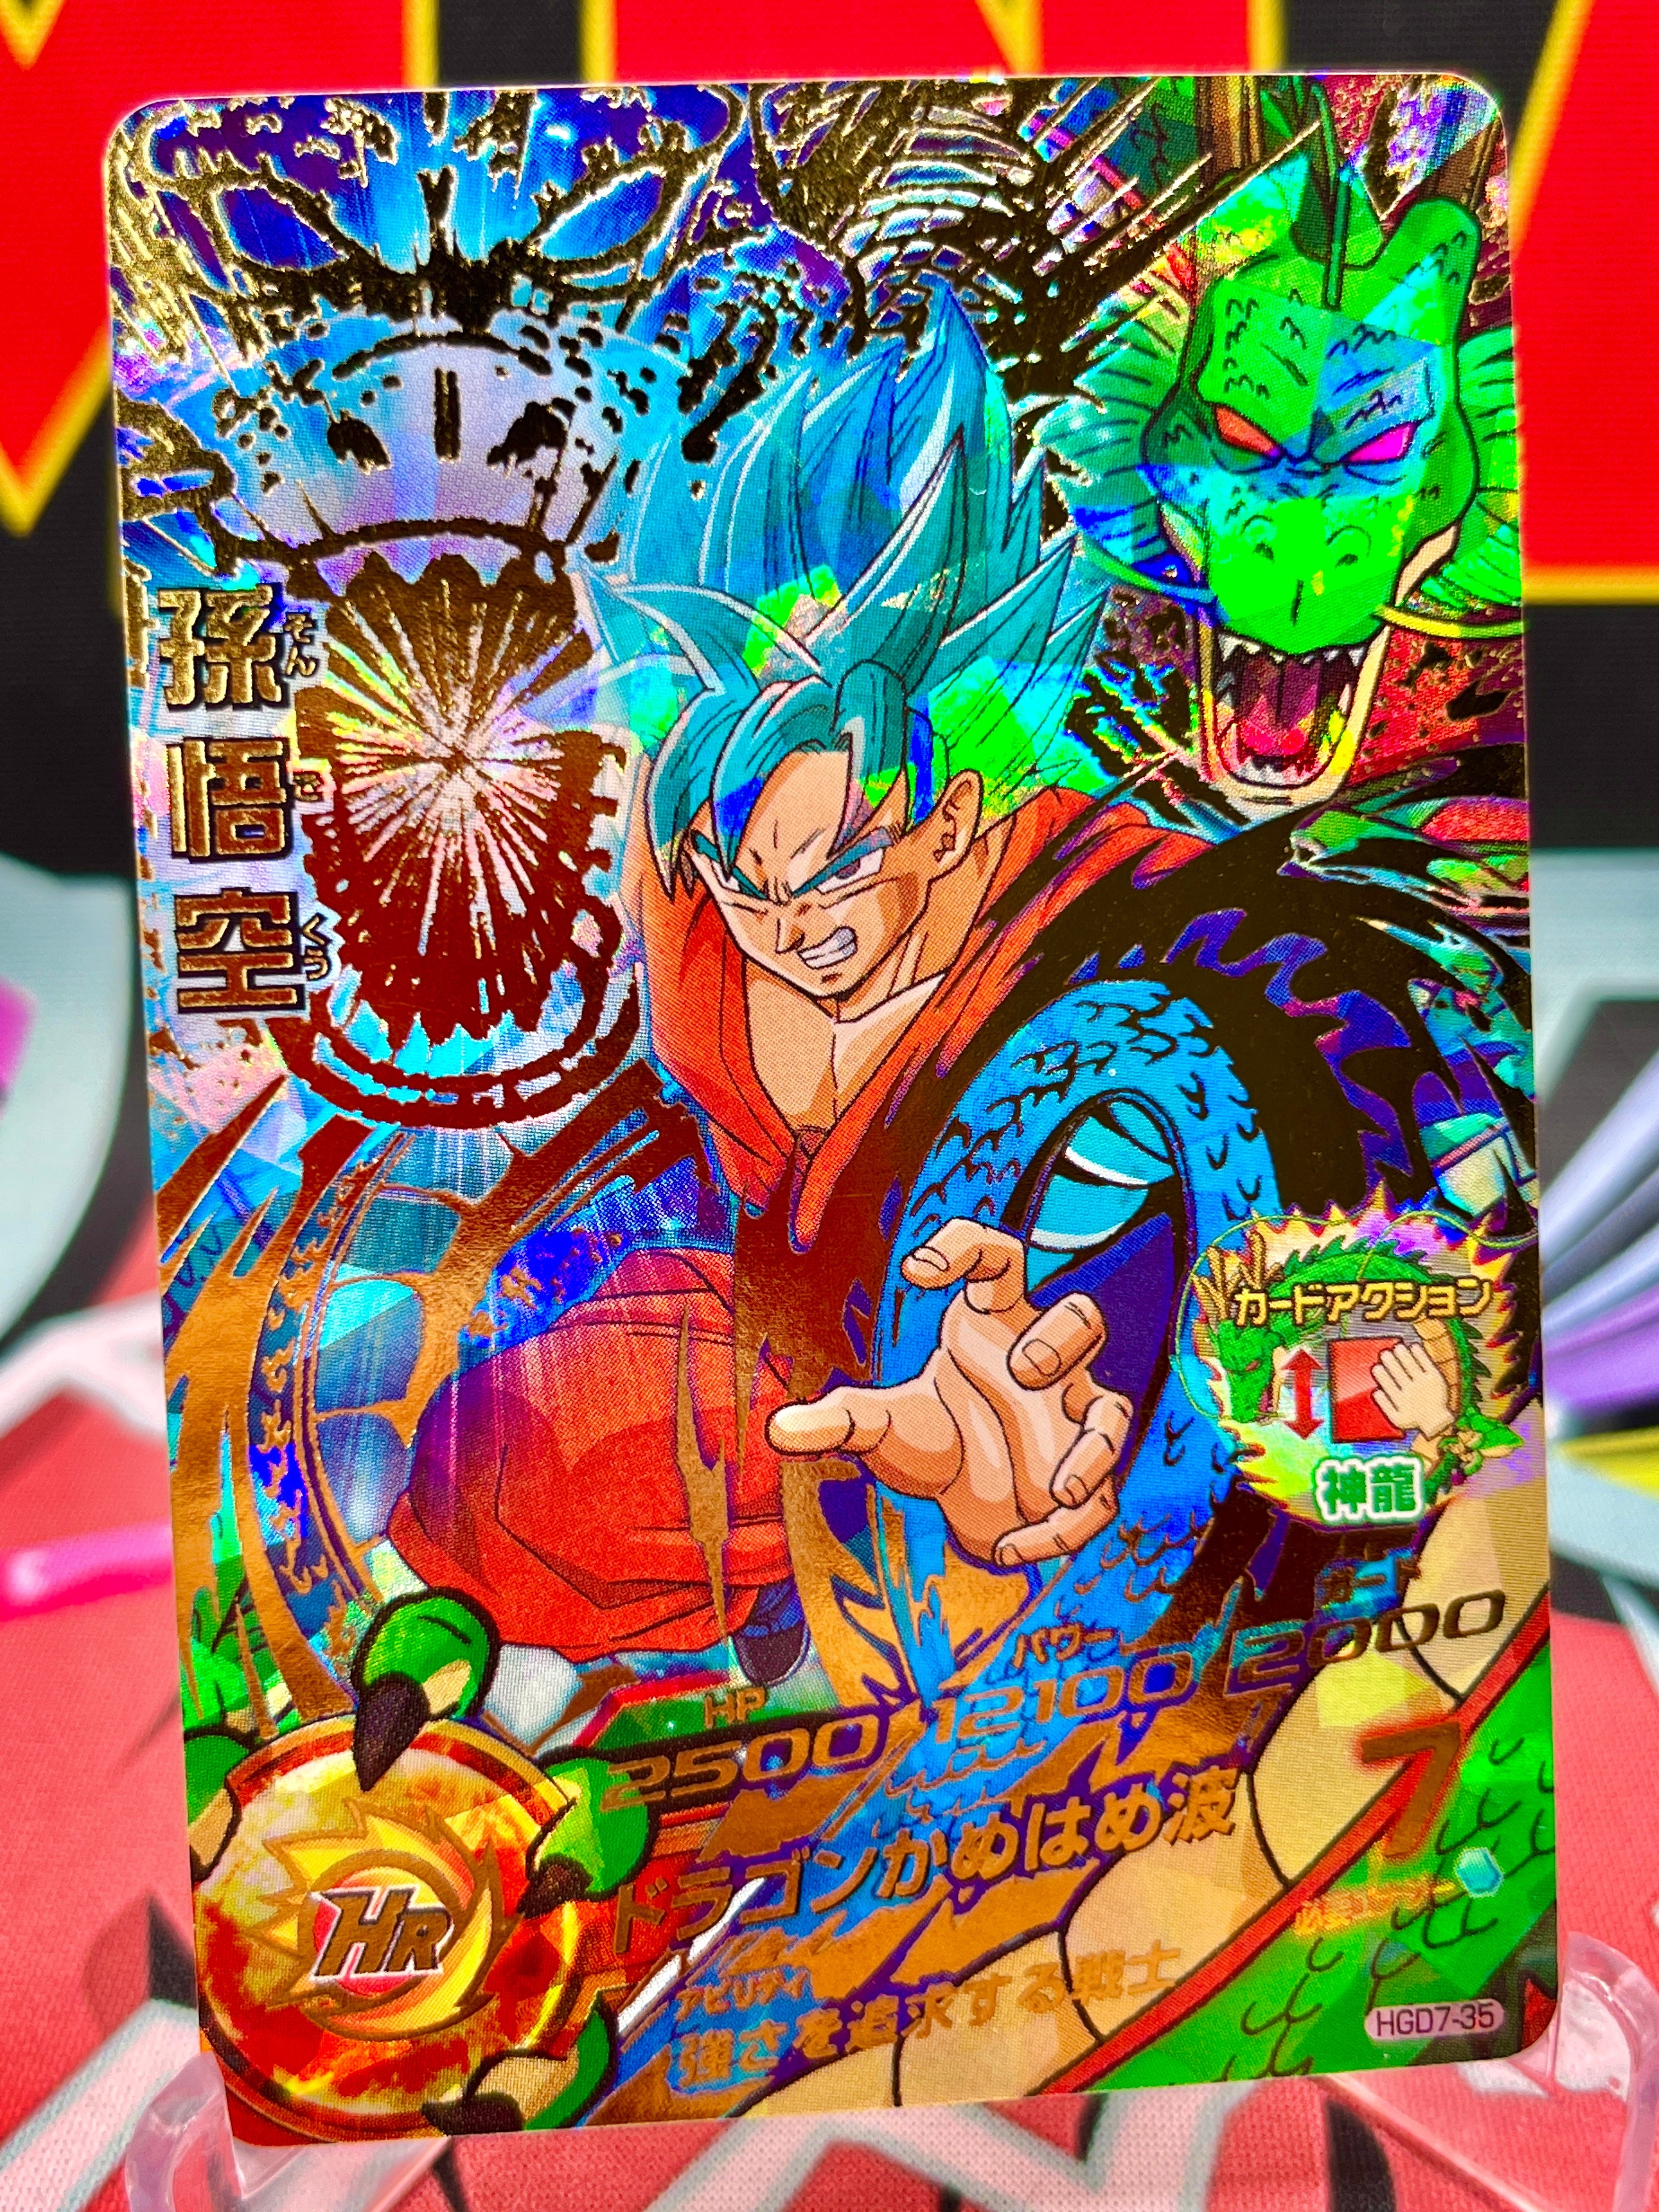 HGD7-35 Son Goku Vintage UR (2016)